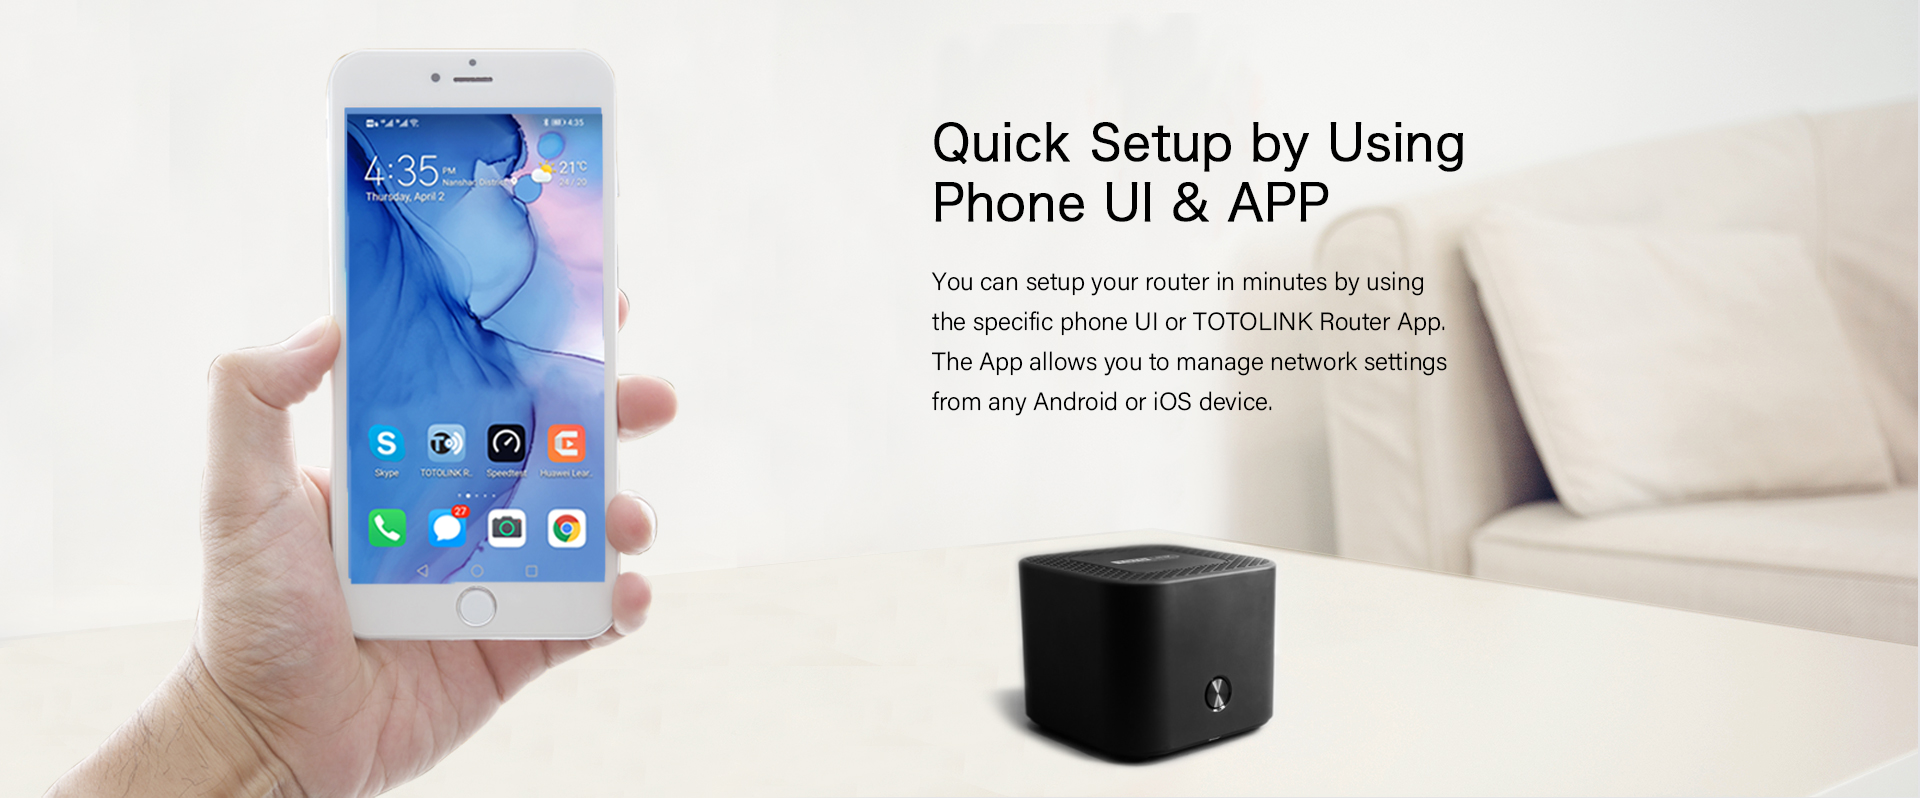 phone UI & APP Setup support 